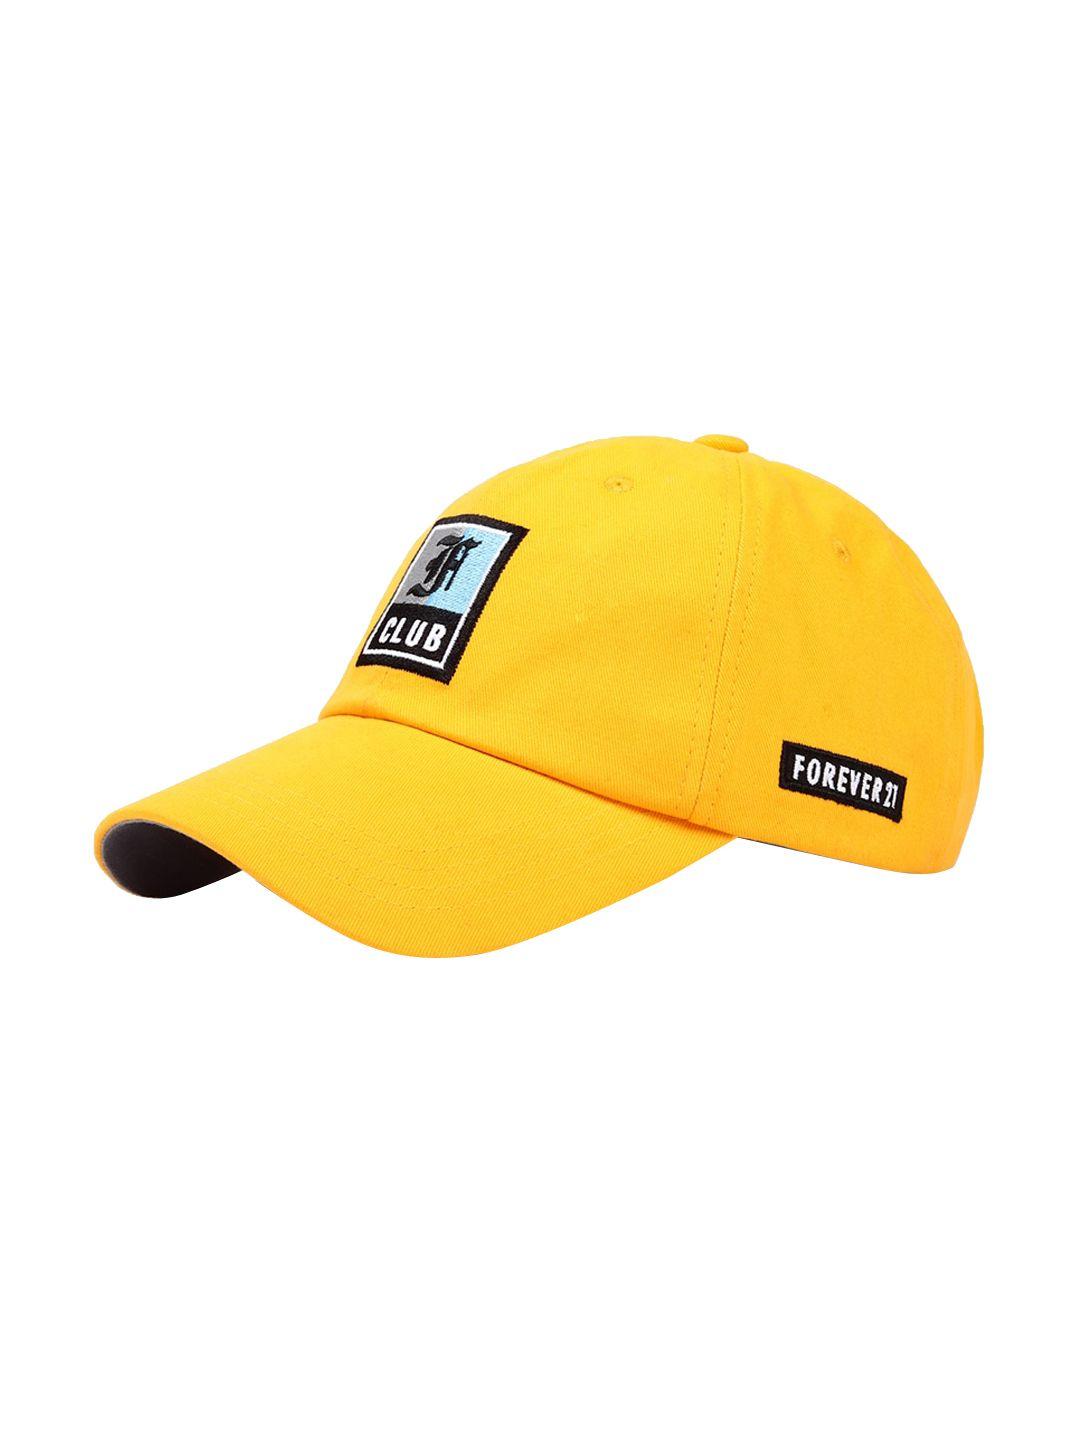 forever 21 men yellow embroidered baseball cap